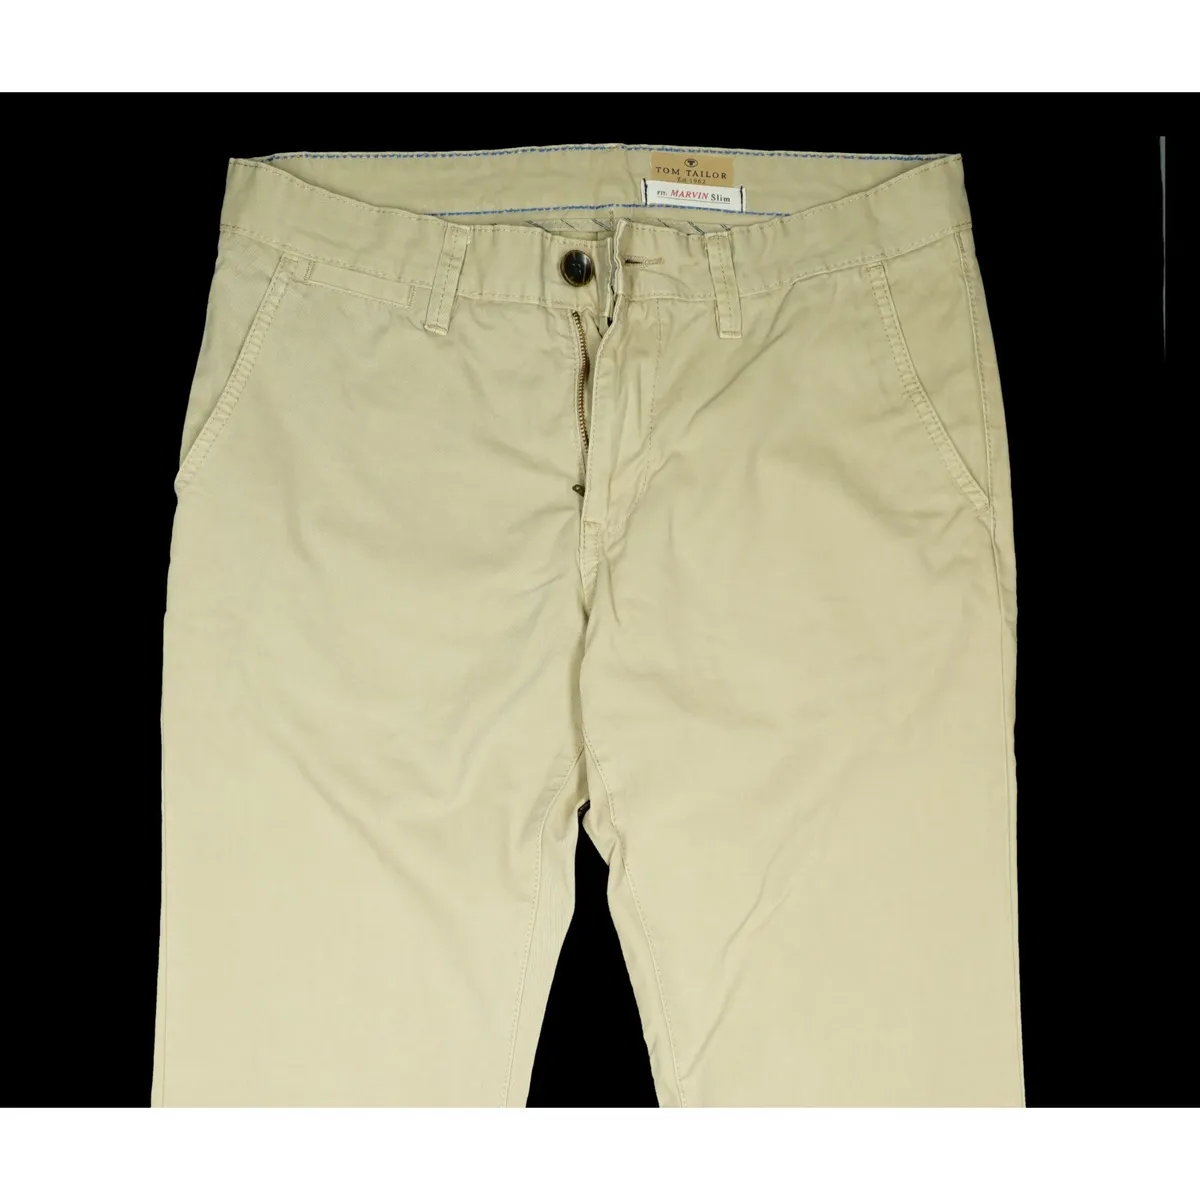 TOM TAILOR Marvin Herren Jeans Slim beige Hose W32 | L32 eBay M 48 Gr Fit Leg straight